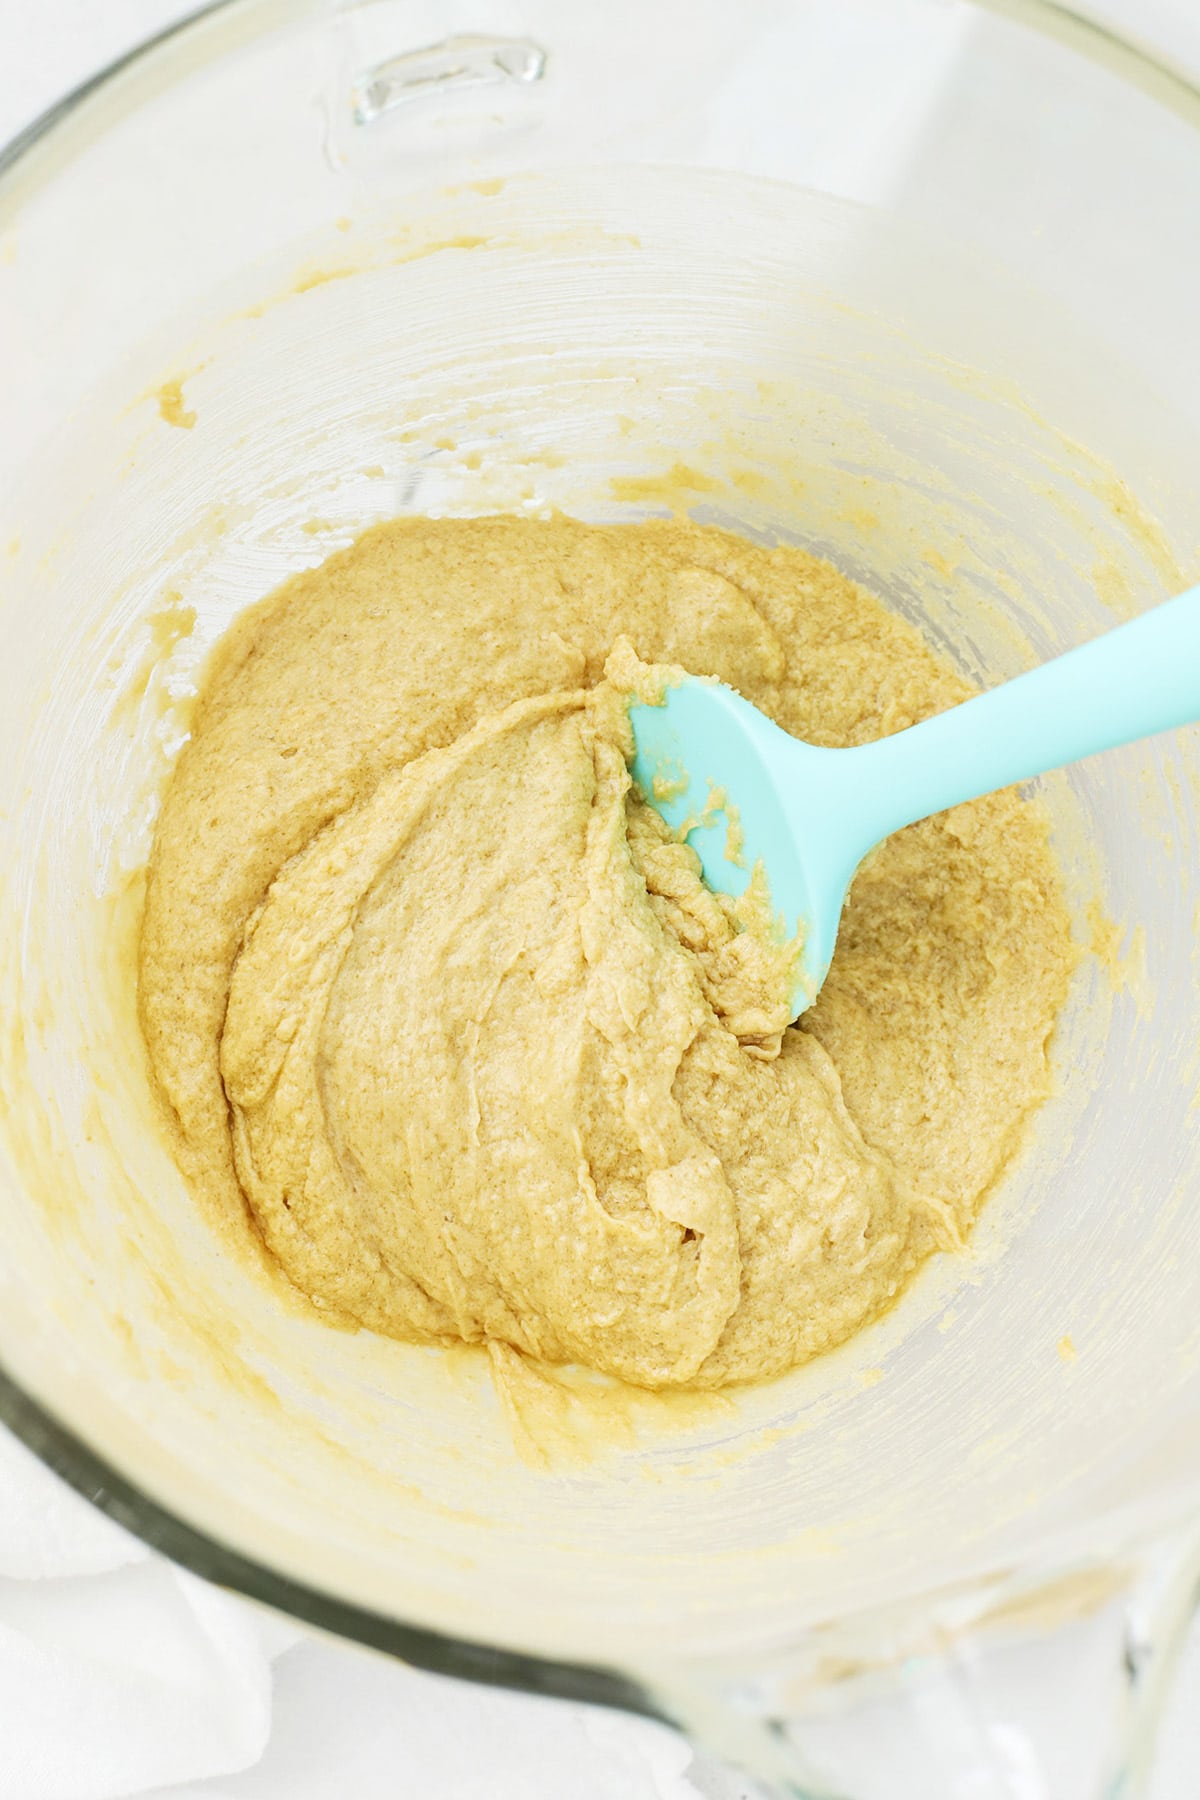 Creamed wet ingredients for gluten-free Levain chocolate chip cookies